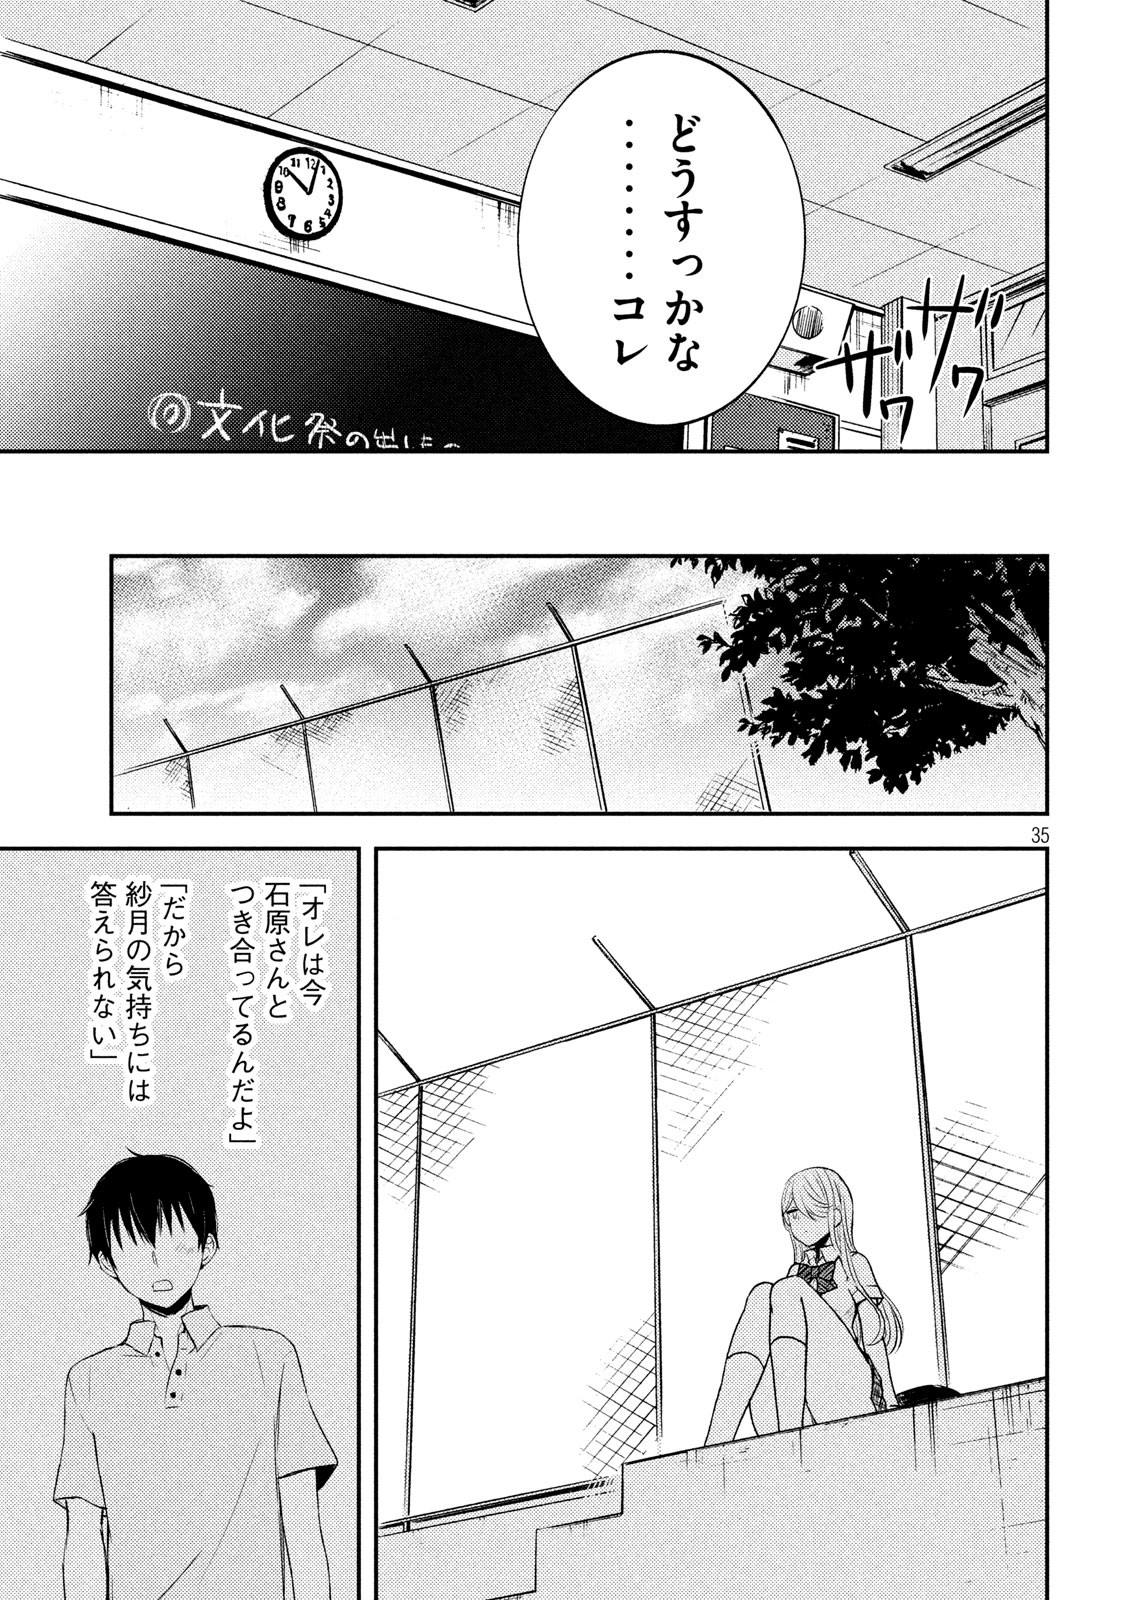 Watari-kun no xx ga Houkai Sunzen - Chapter 51 - Page 35